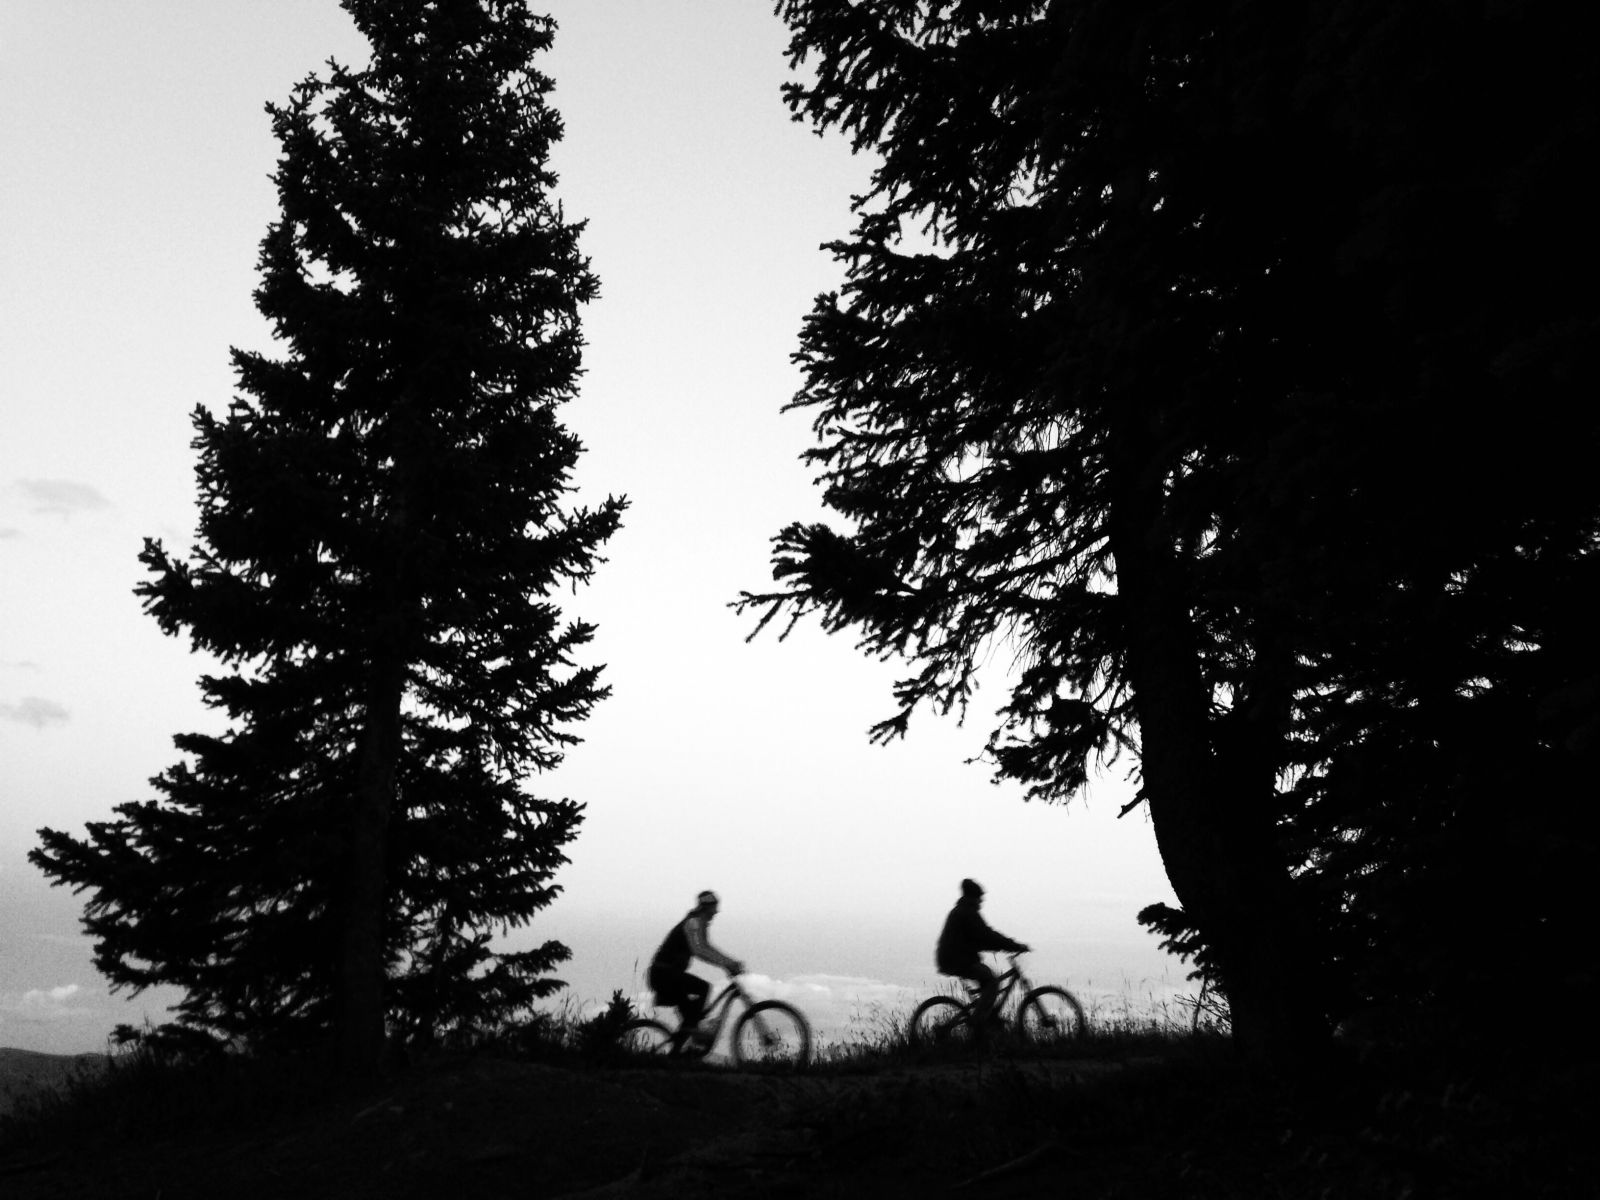 East Vail Chutes, Mountain Biking, Black and White Photography